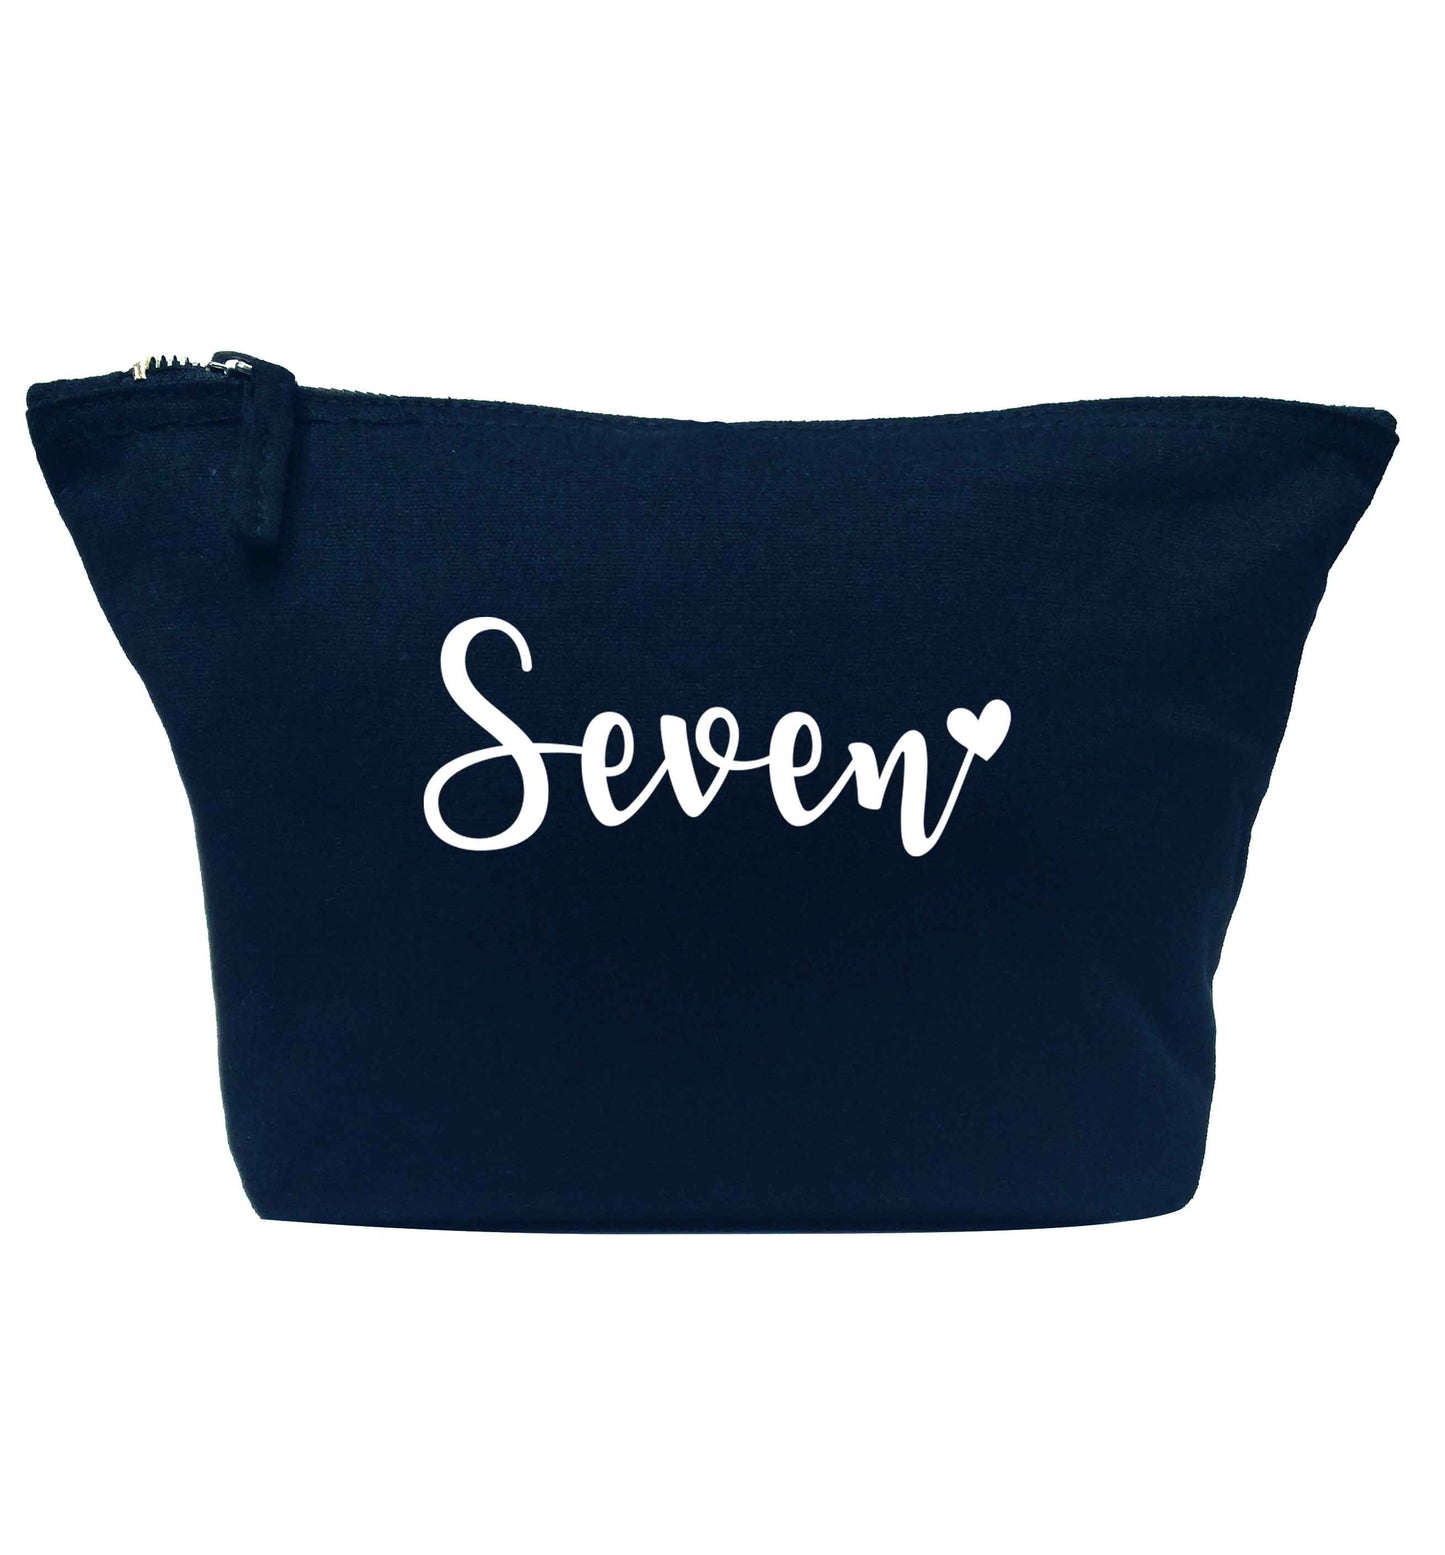 Seven and heart navy makeup bag